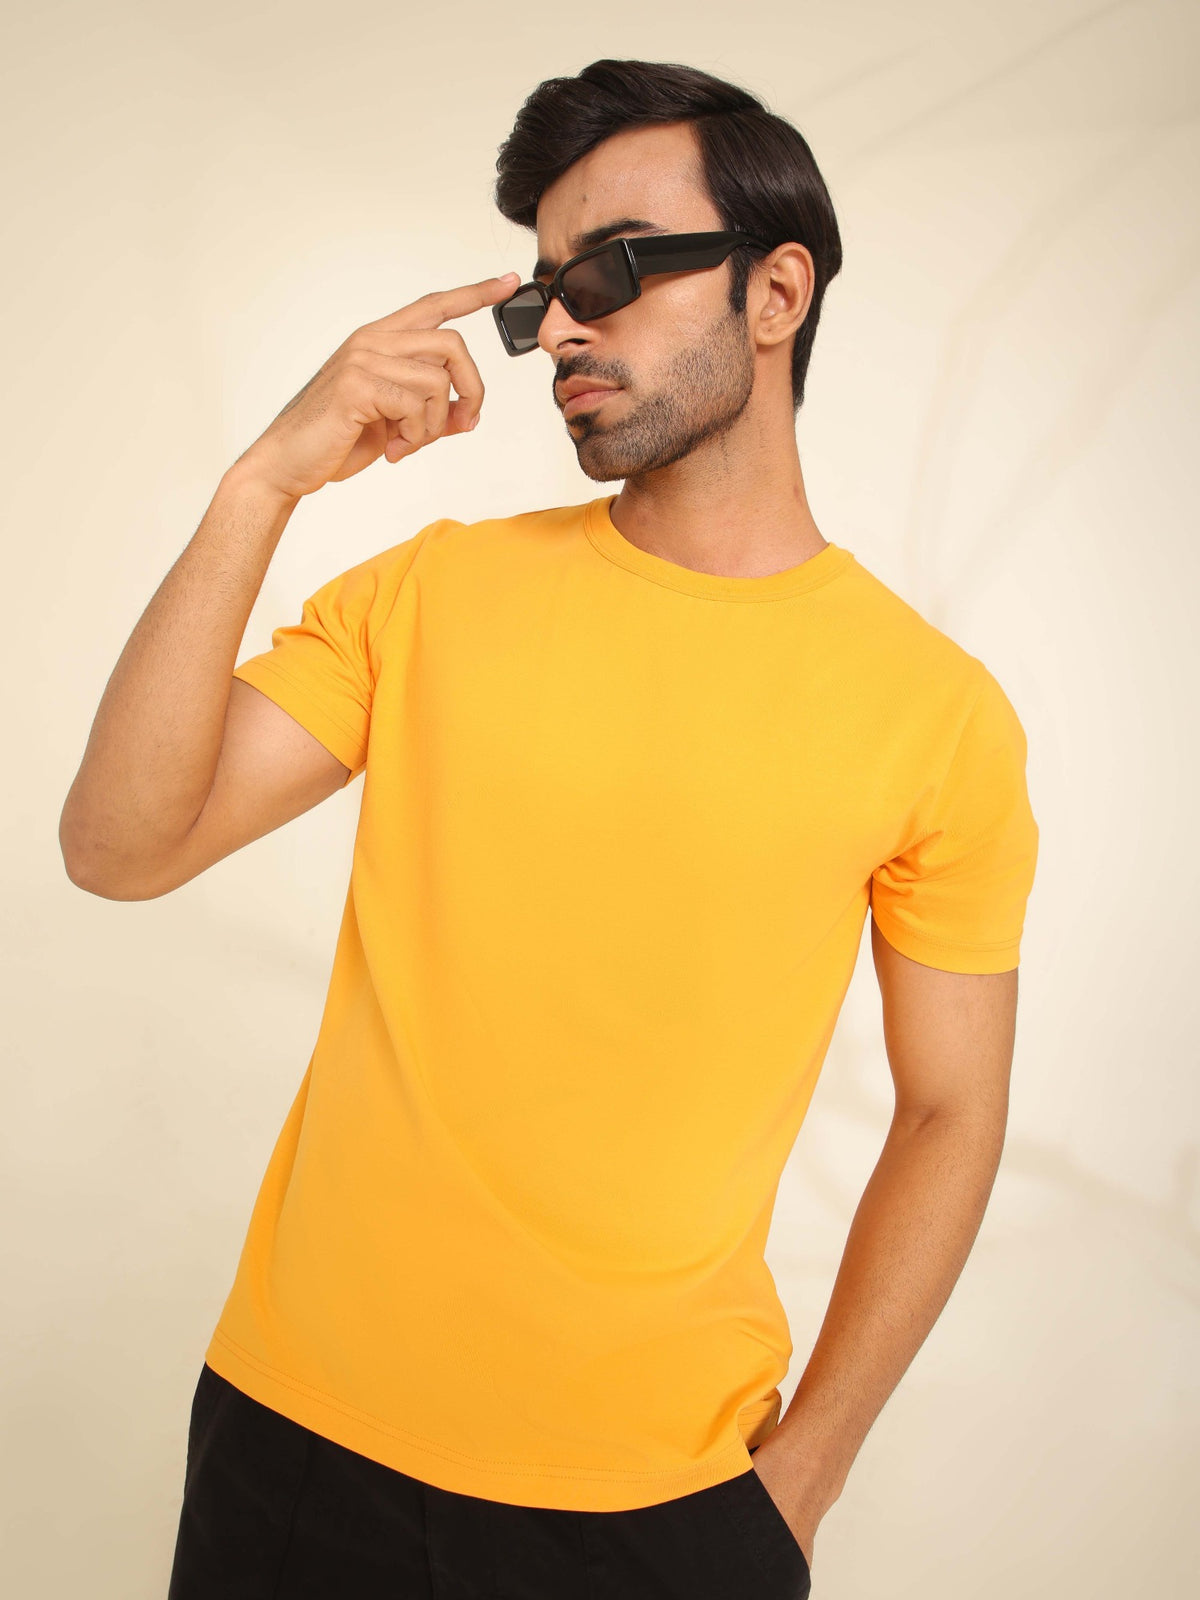 4-Way Stretch T-Shirt in Marigold